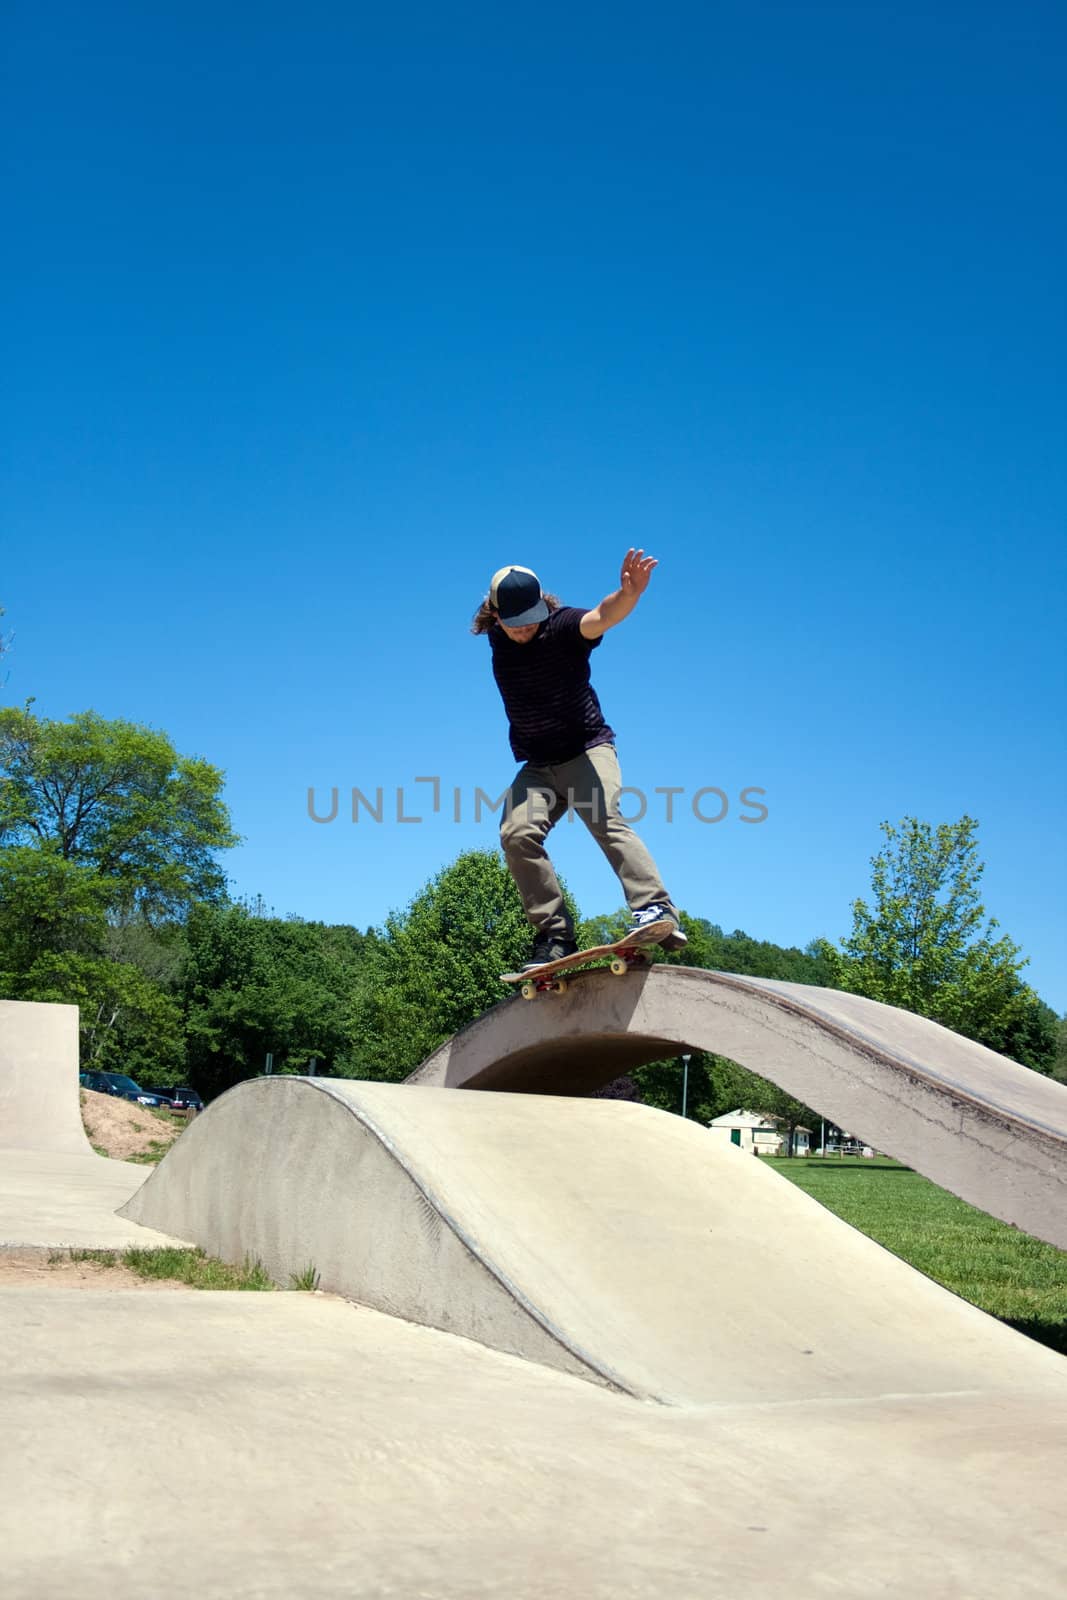 Skateboarder Grinding at the Skate Park by graficallyminded